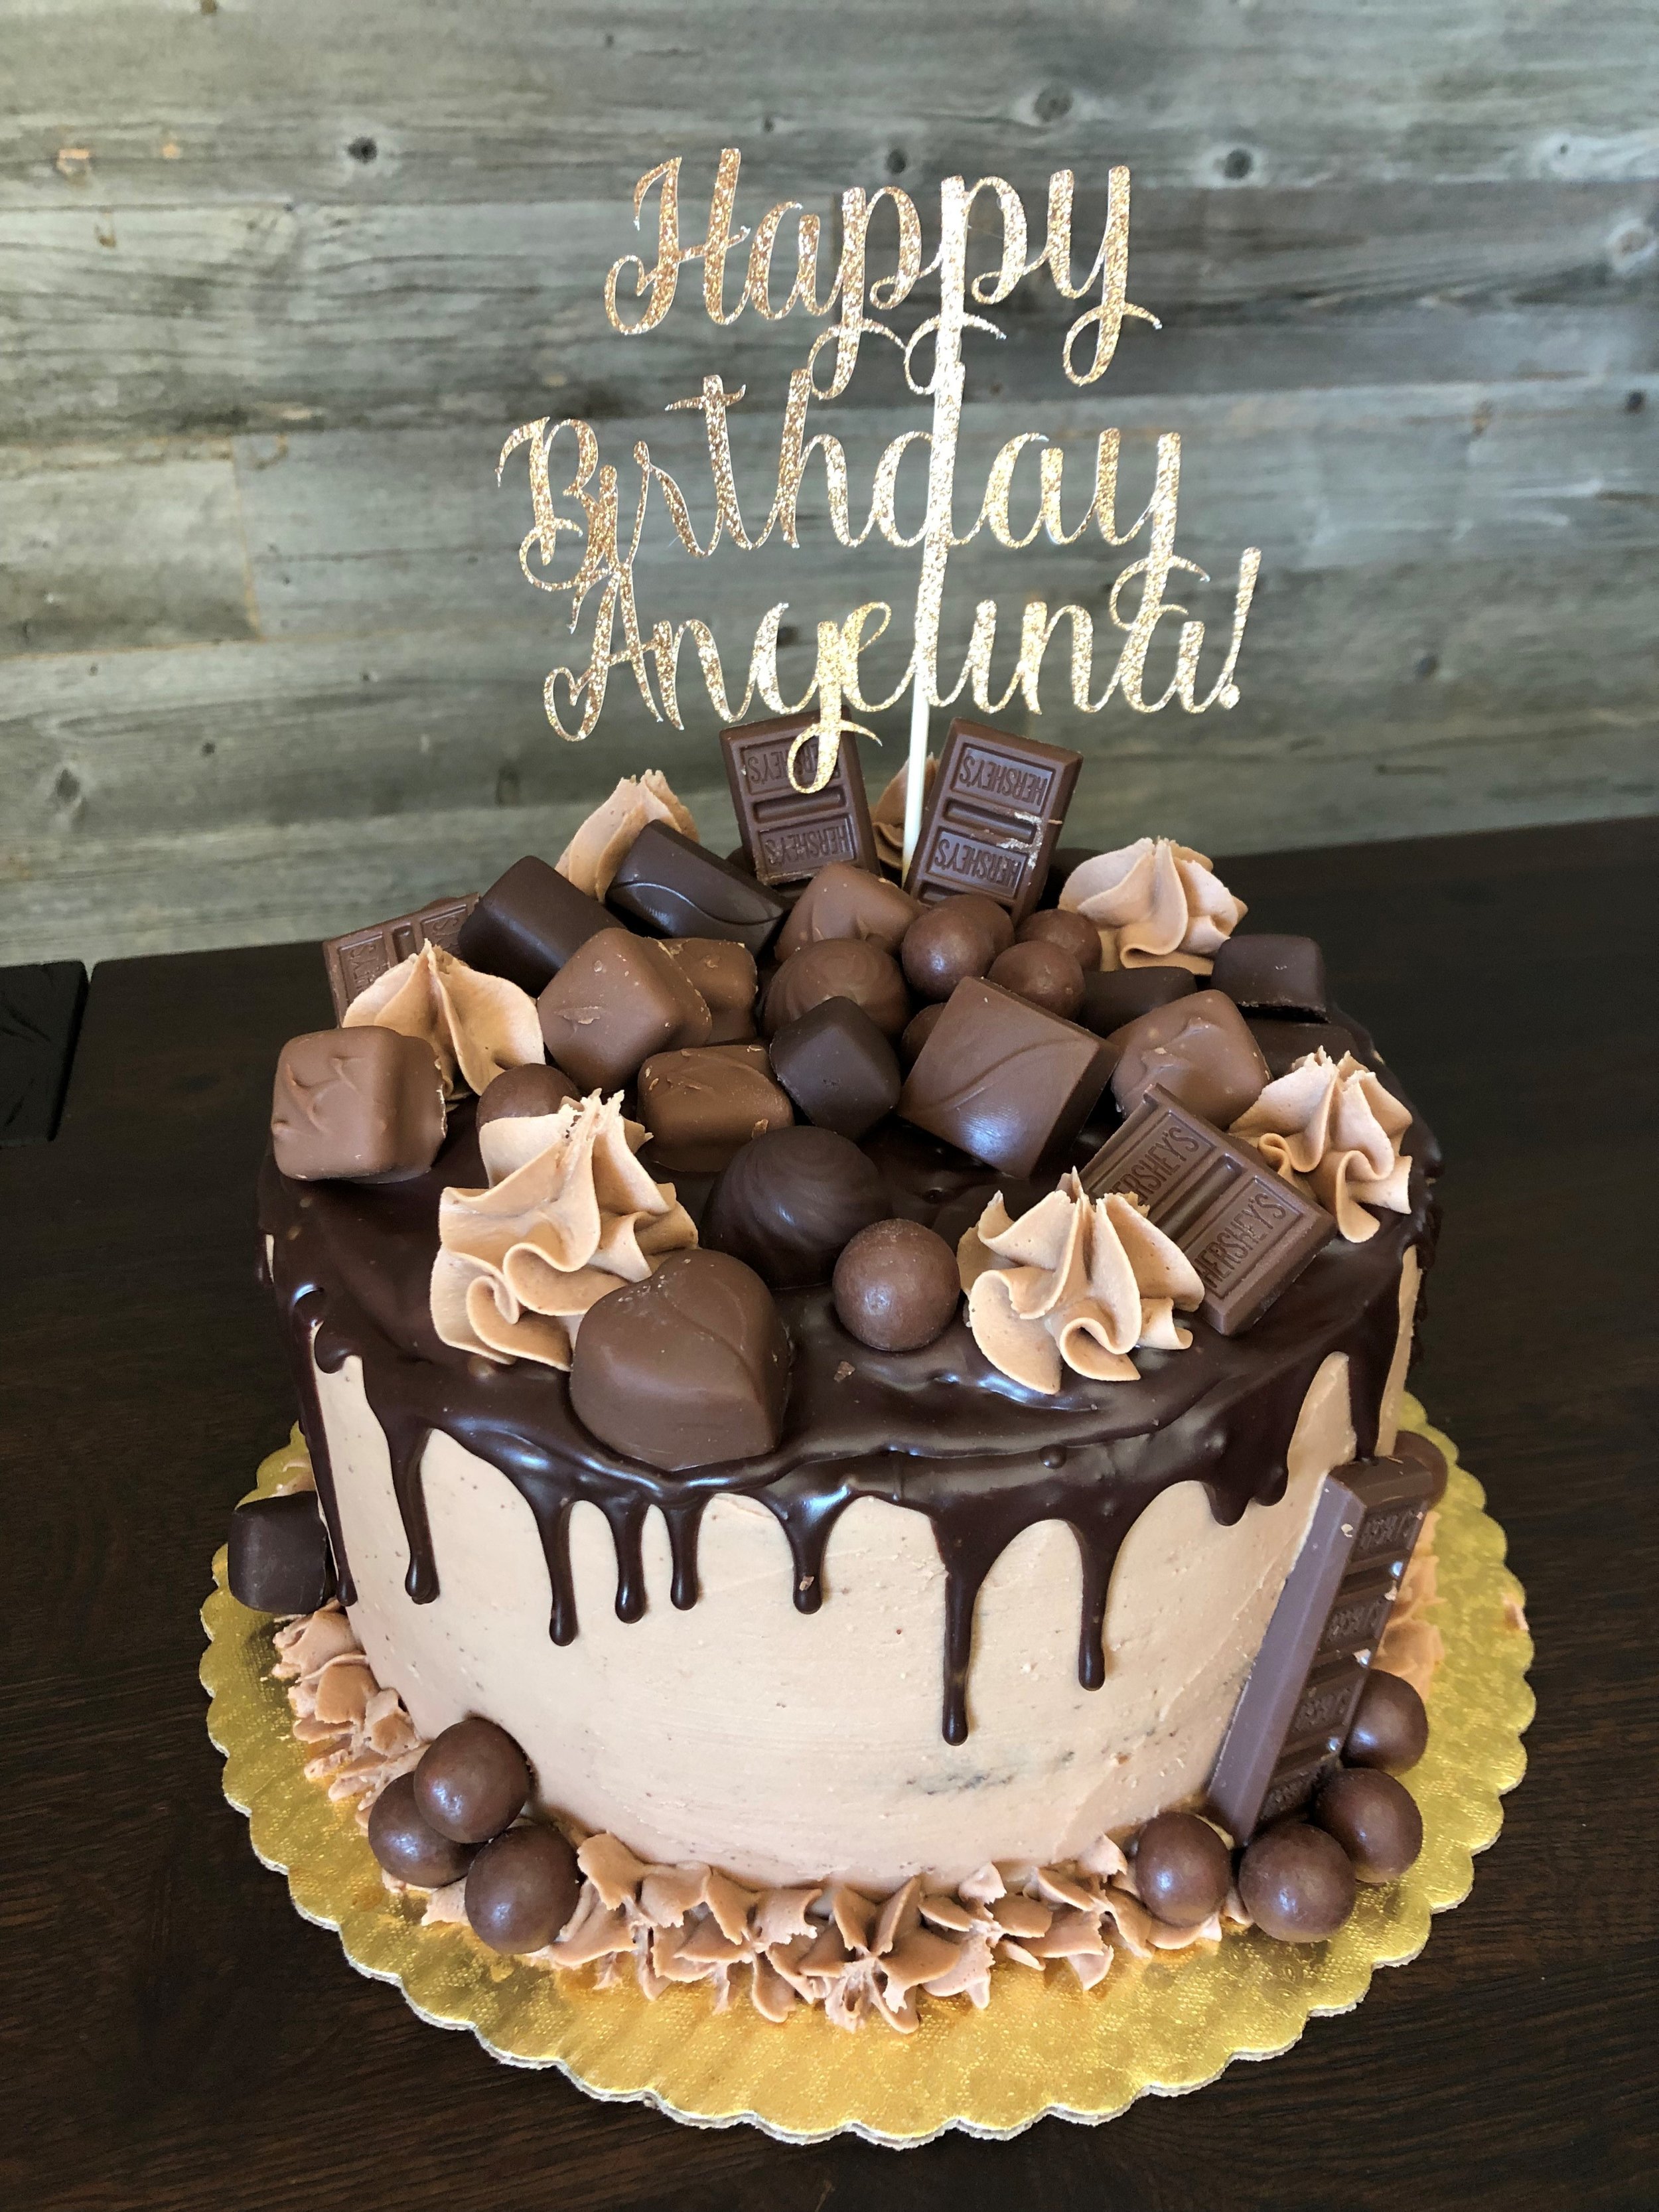 Chocolate cake with chocolate decorations.jpg